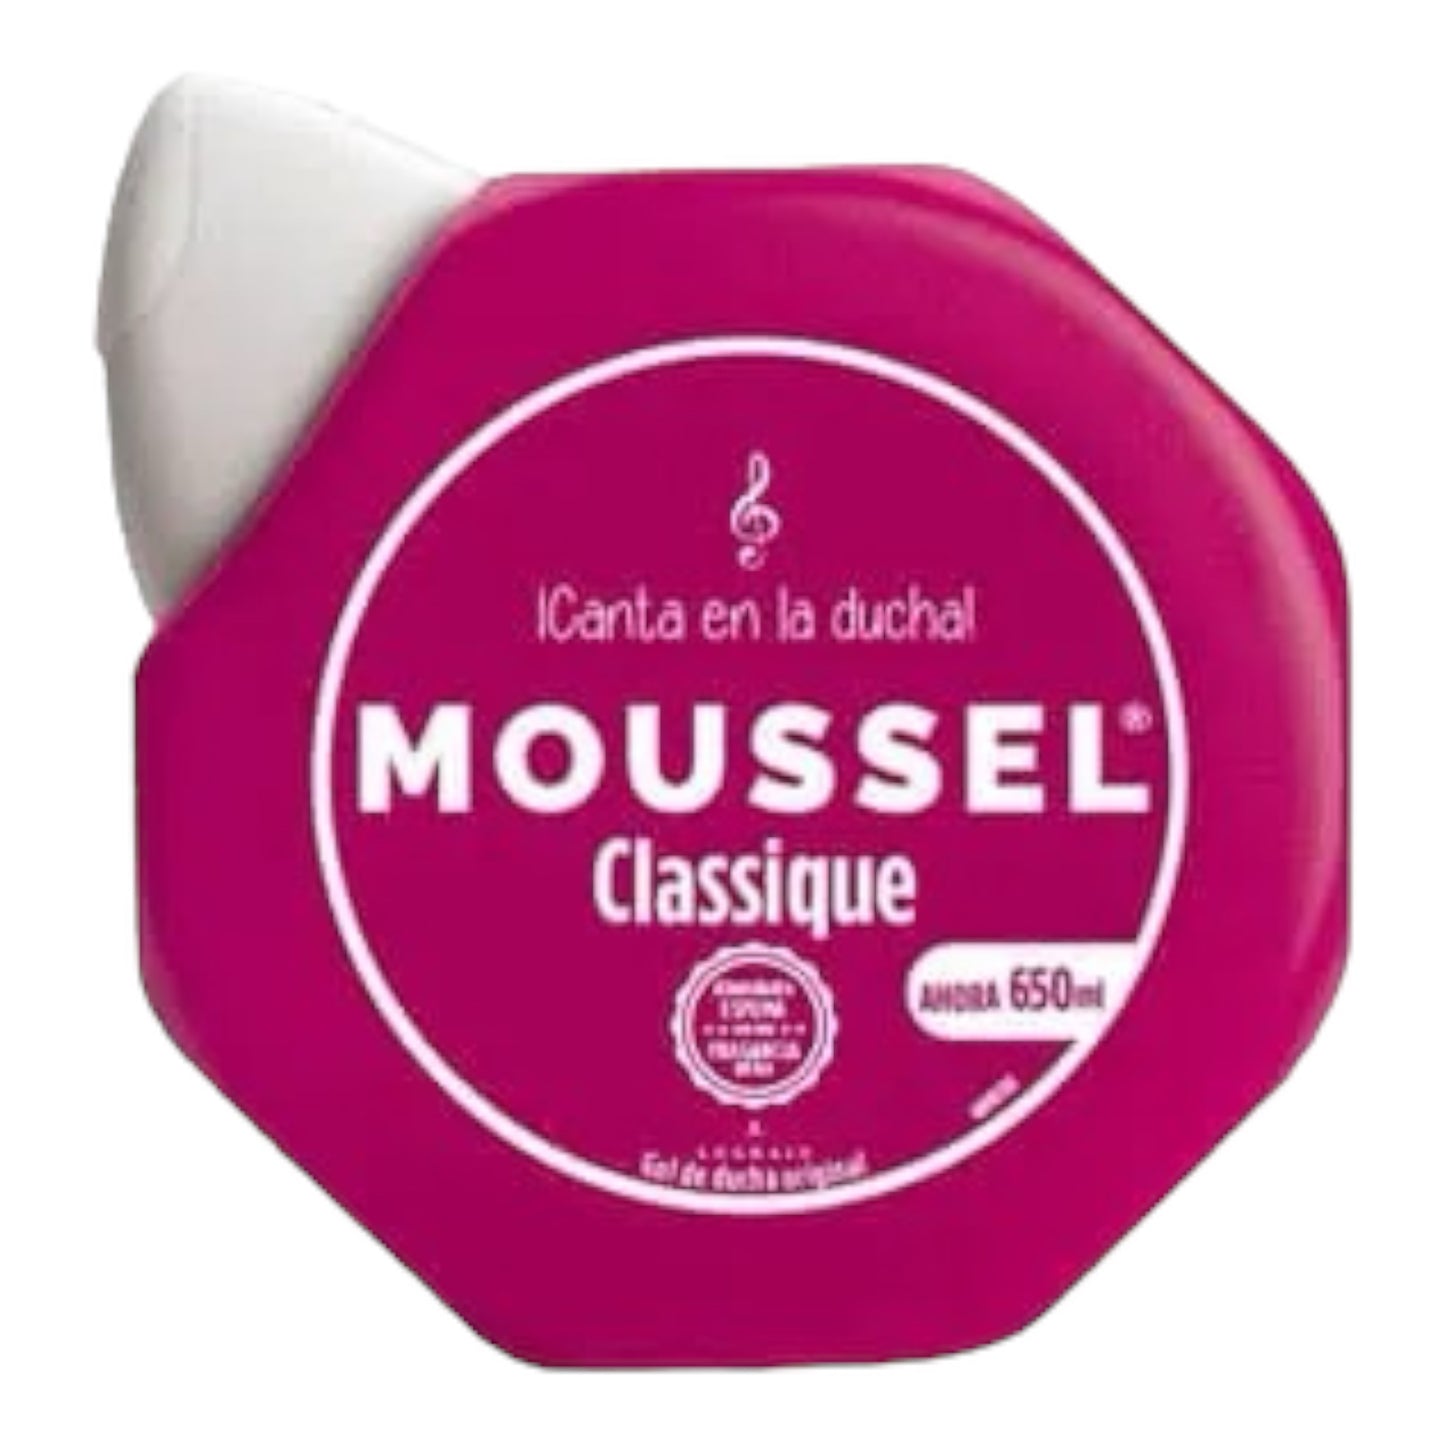 Gel Moussel Classique 650 ml Formato Familiar Legrain